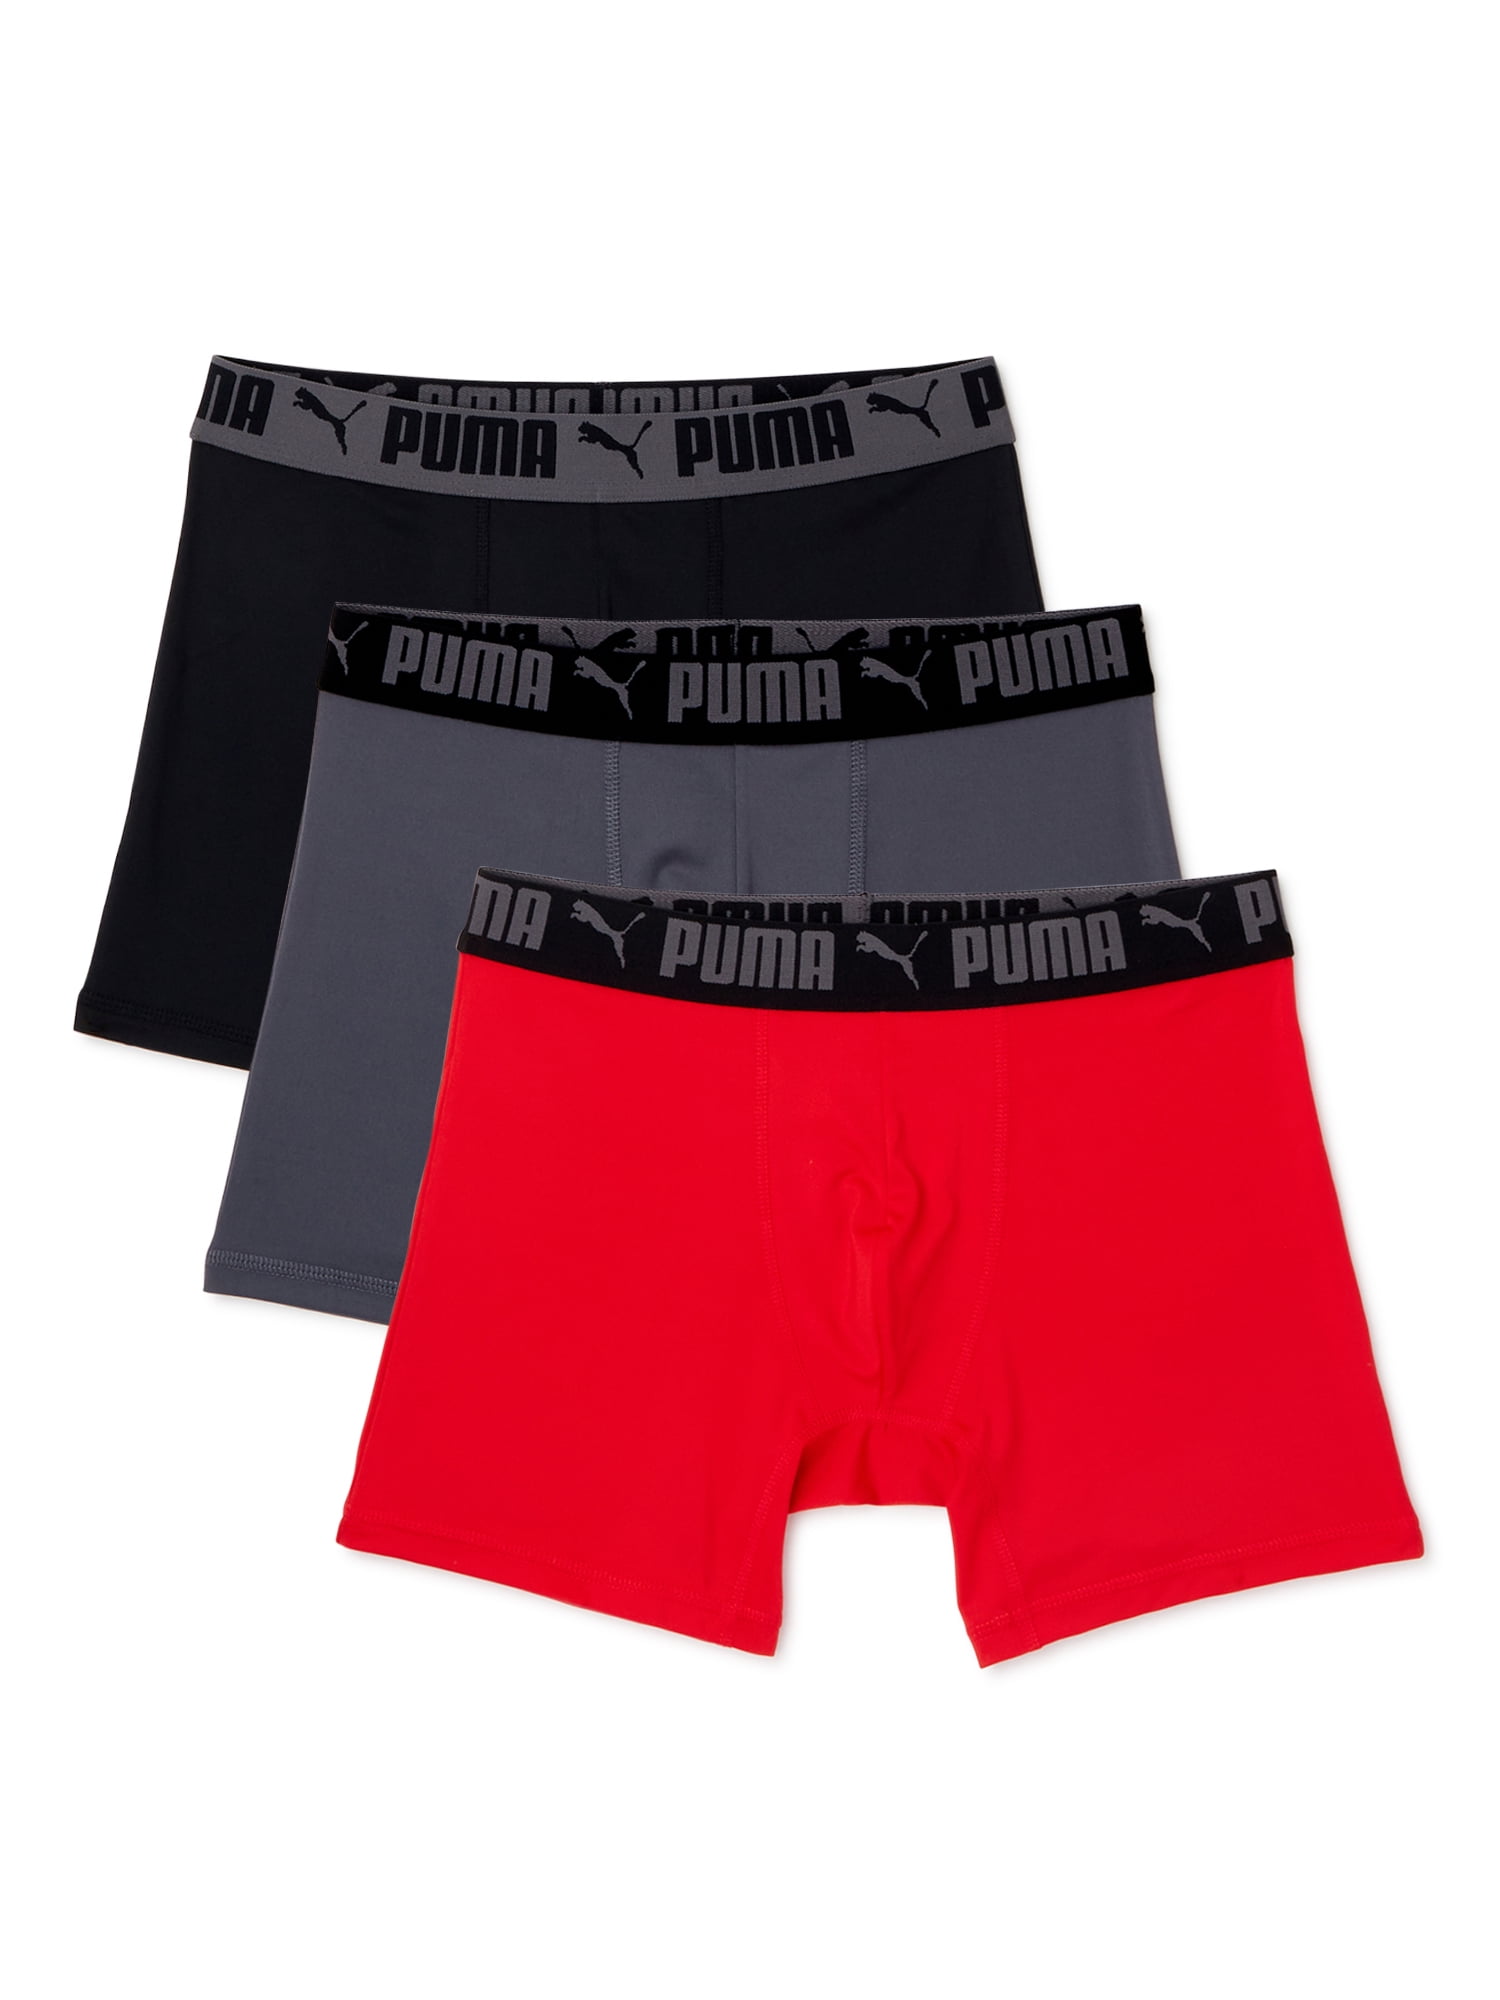 Brullen Adverteerder Wiskunde Puma Men's Boxer Briefs, 3-Pack - Walmart.com